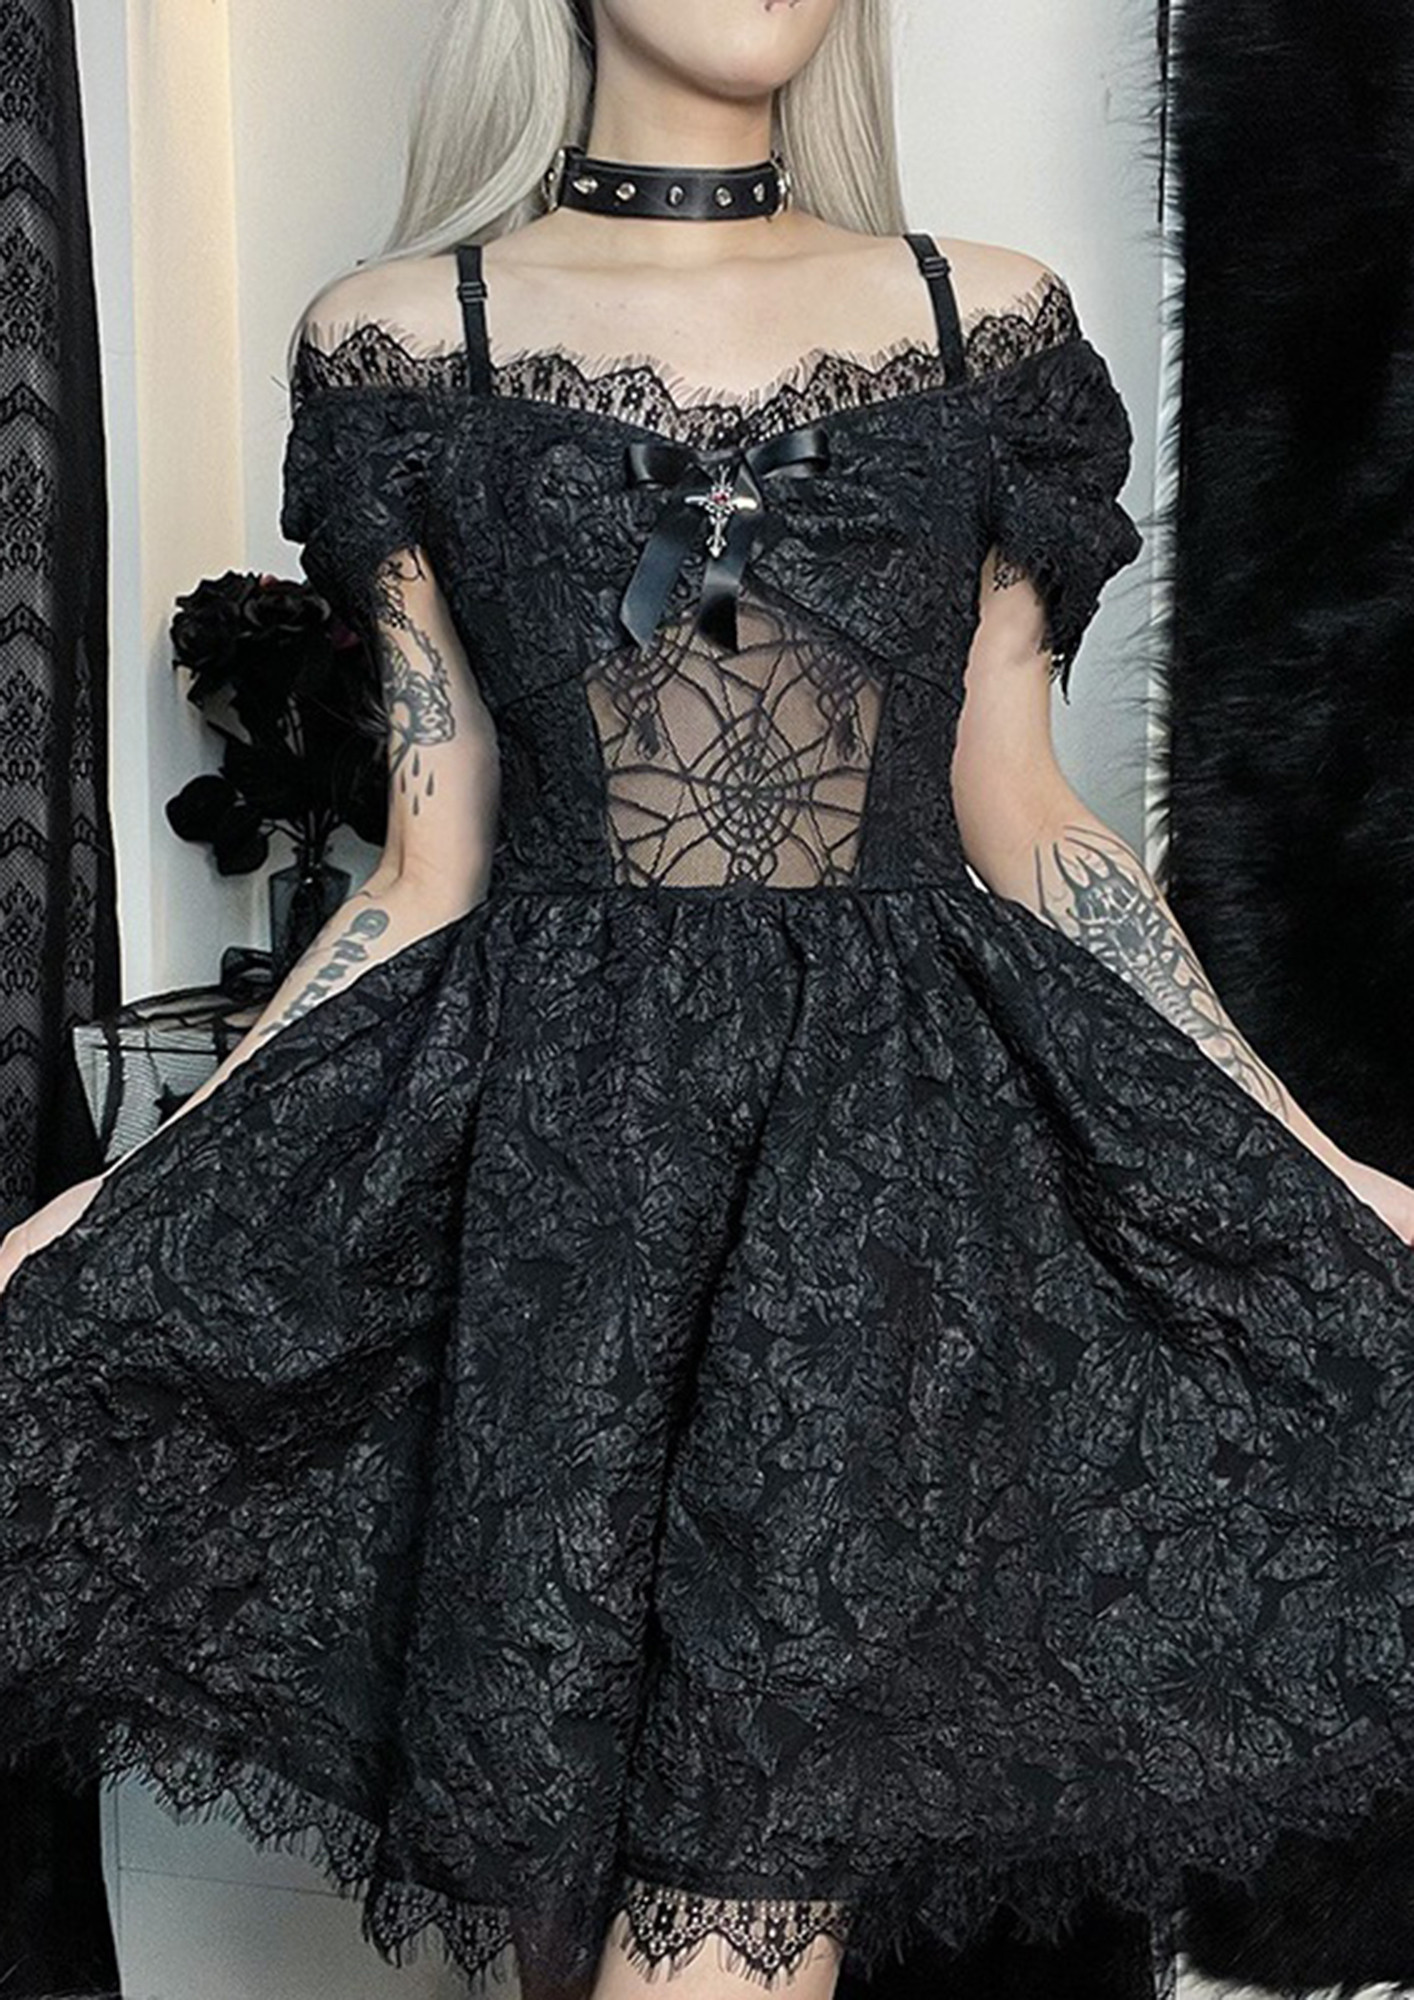 Black Magic Fairytale: Beautiful Black Dress in the Snow